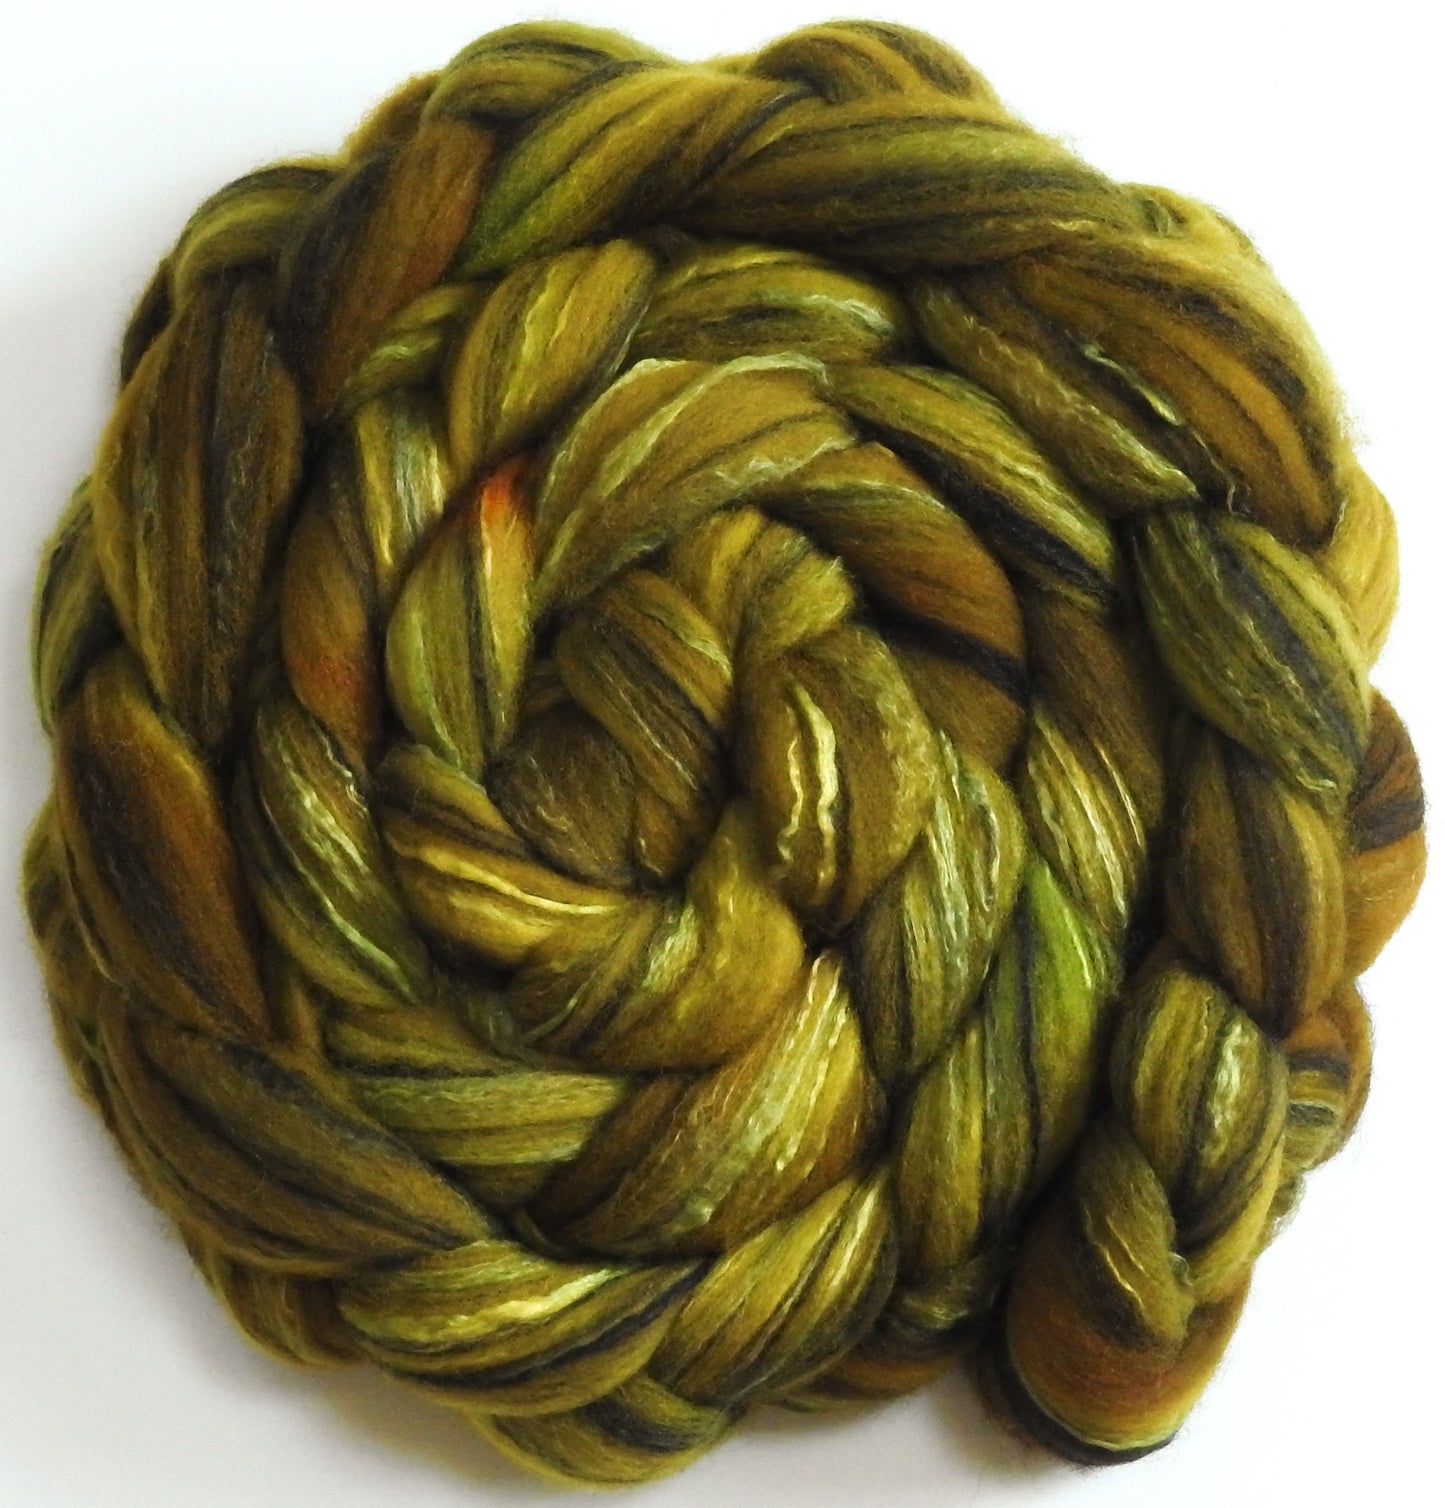 Spore-(6.1 oz.) Batt in a Braid #30- Charollais/ Rambouillet / Black tussah /Mulberry silk (40/40/10/10)